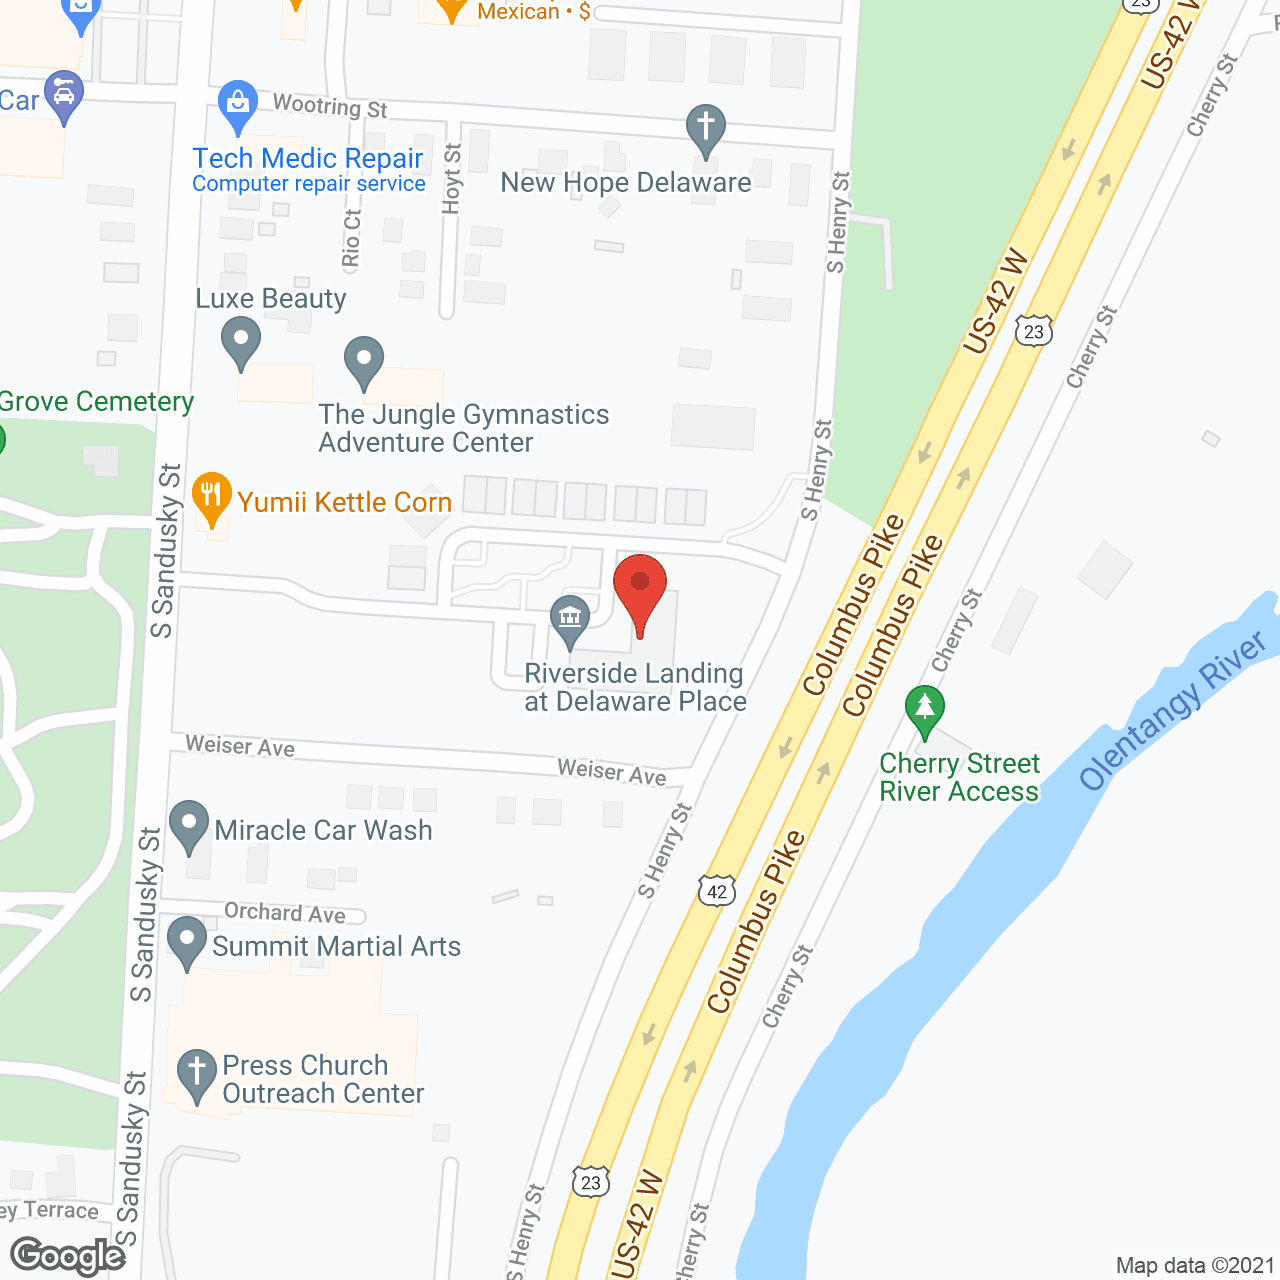 Riverside Landing at Delaware Place in google map